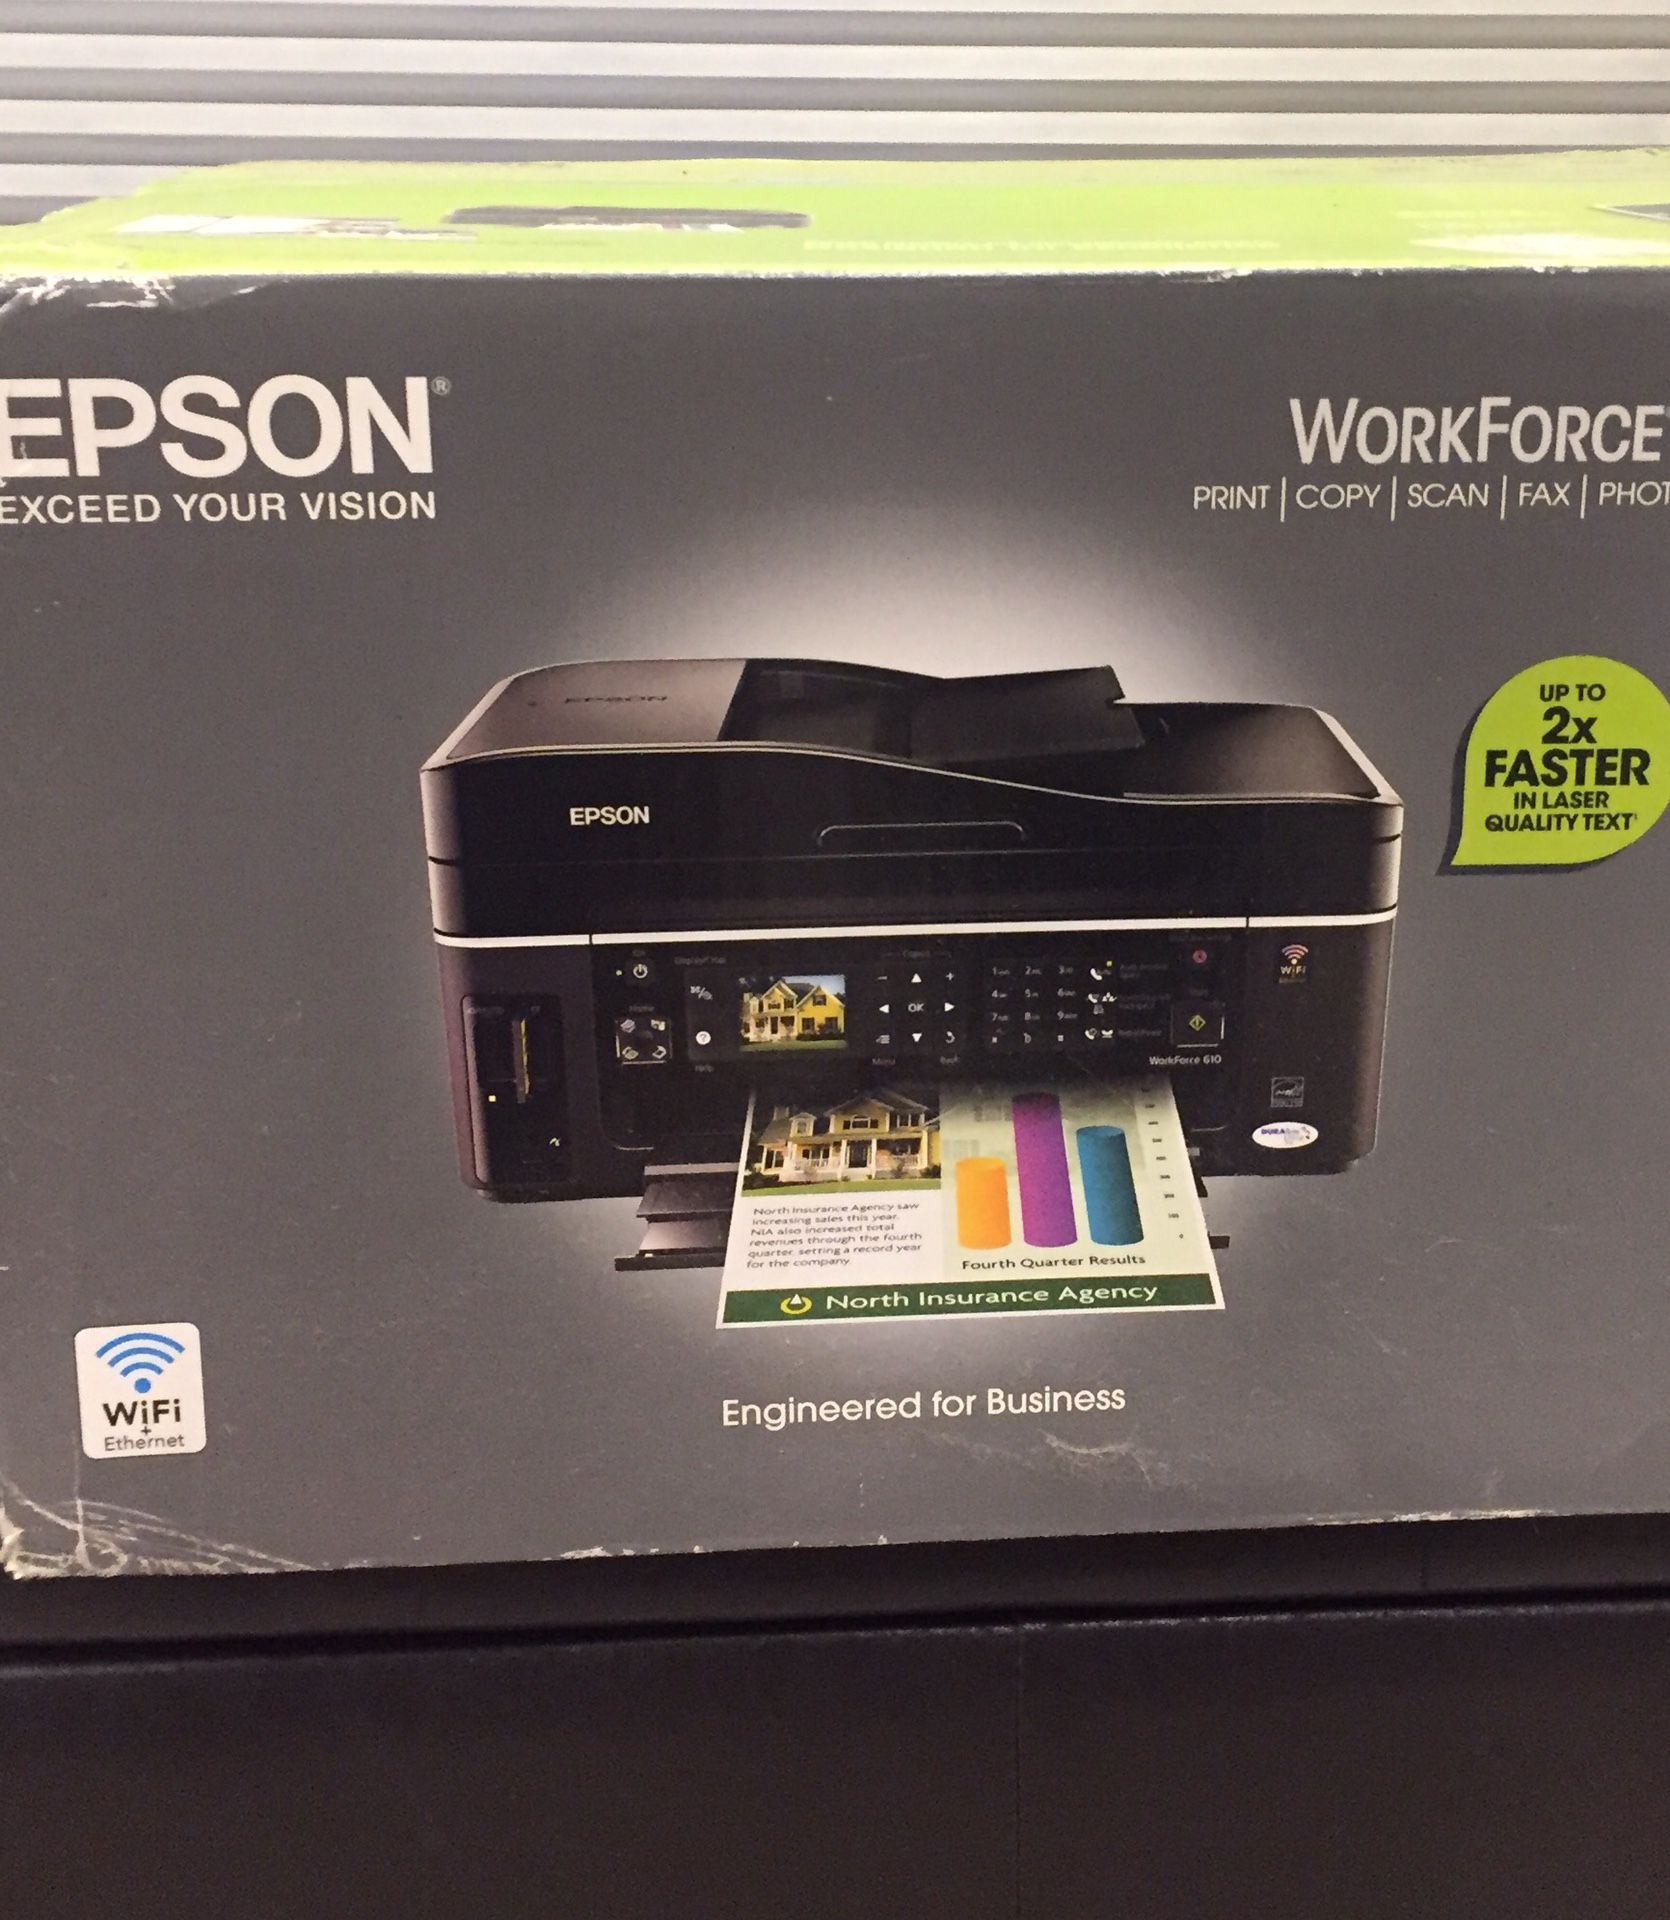 Epson WorkForce 610 Printer